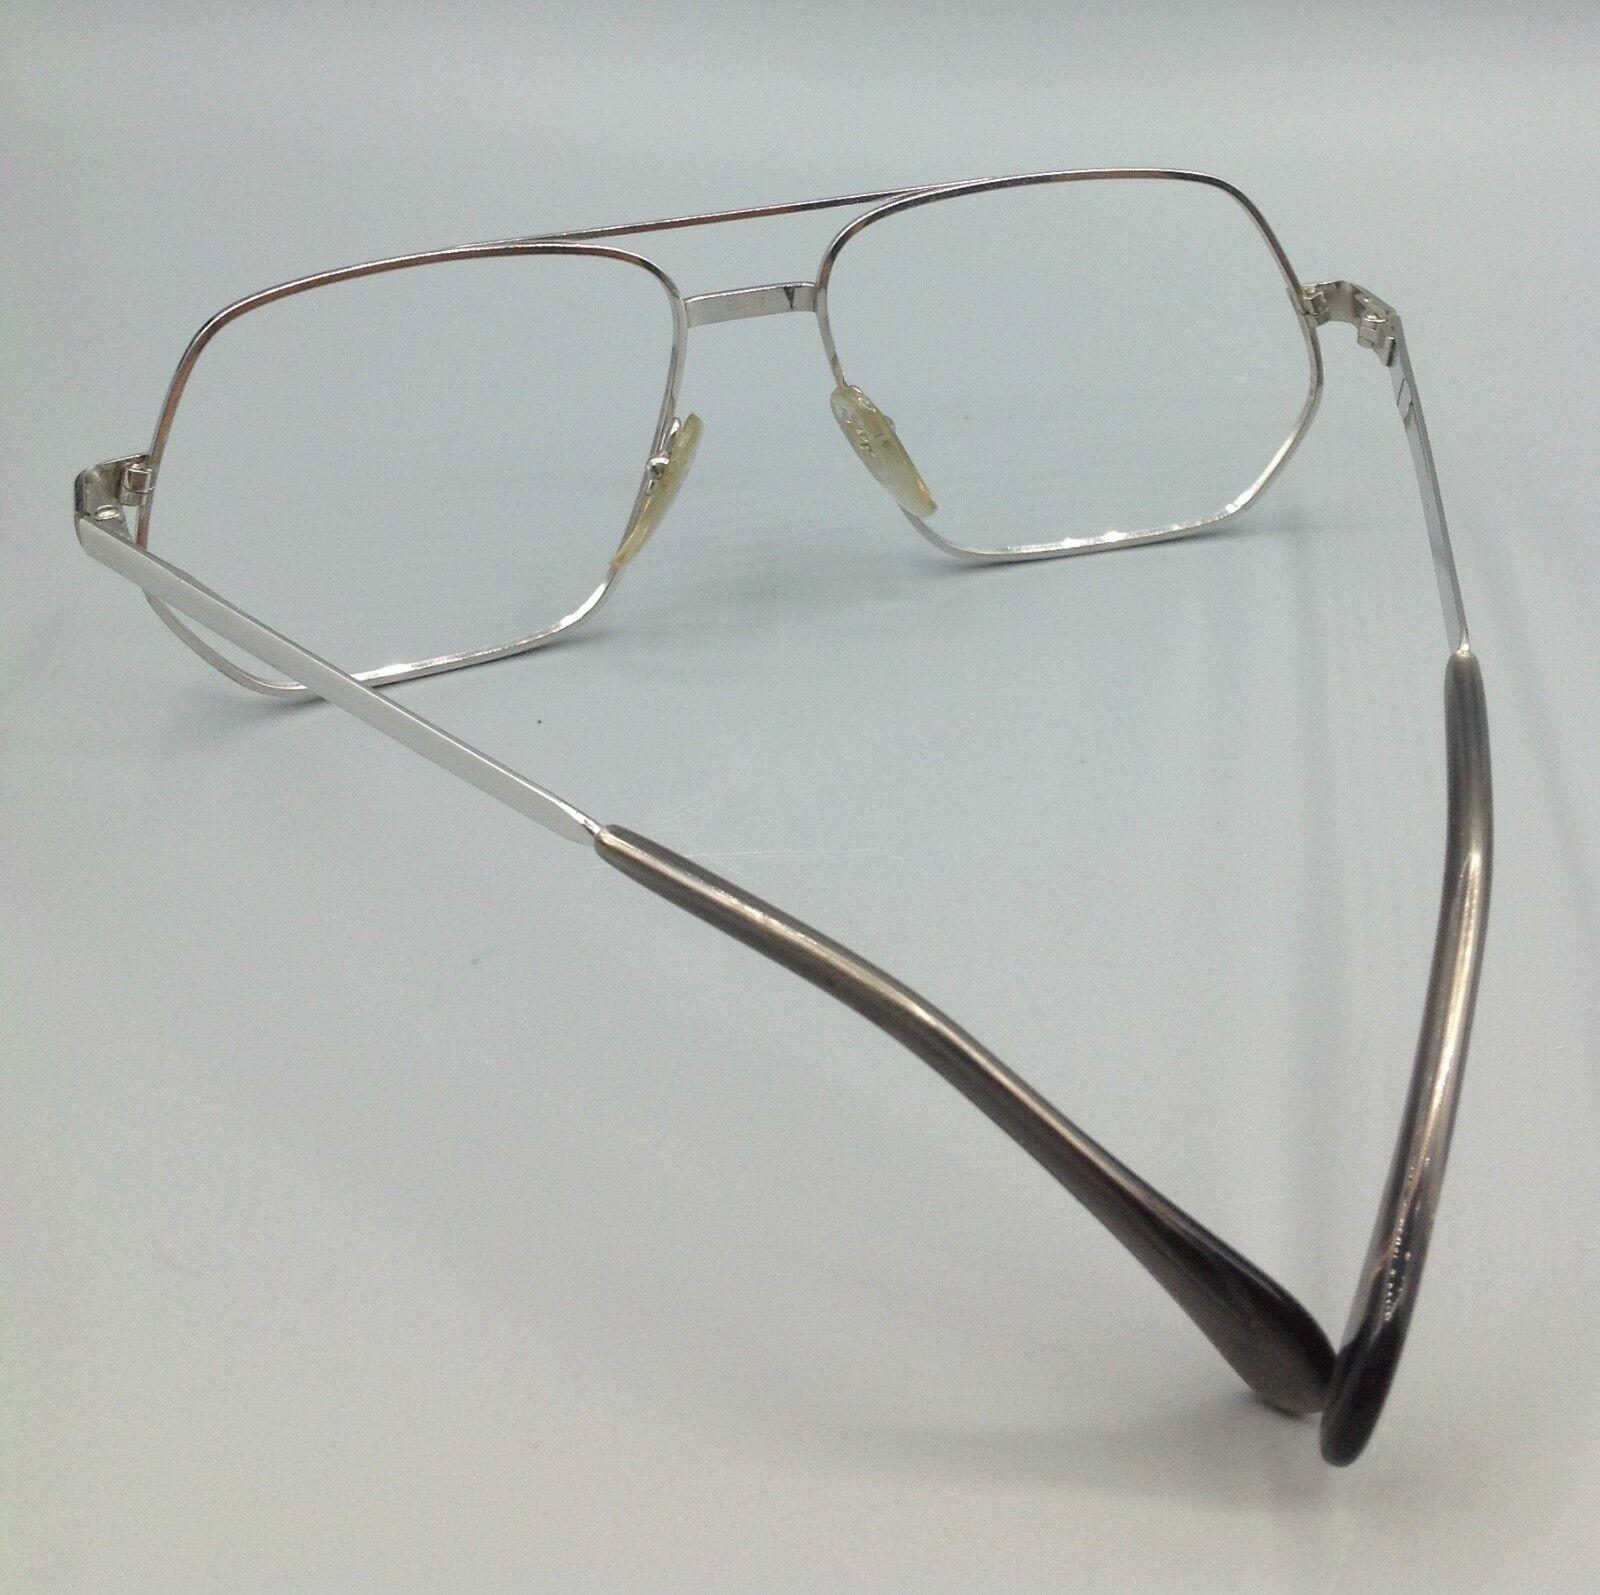 Menrad 3091 eyewear vintage frame brillen gafas lunettes